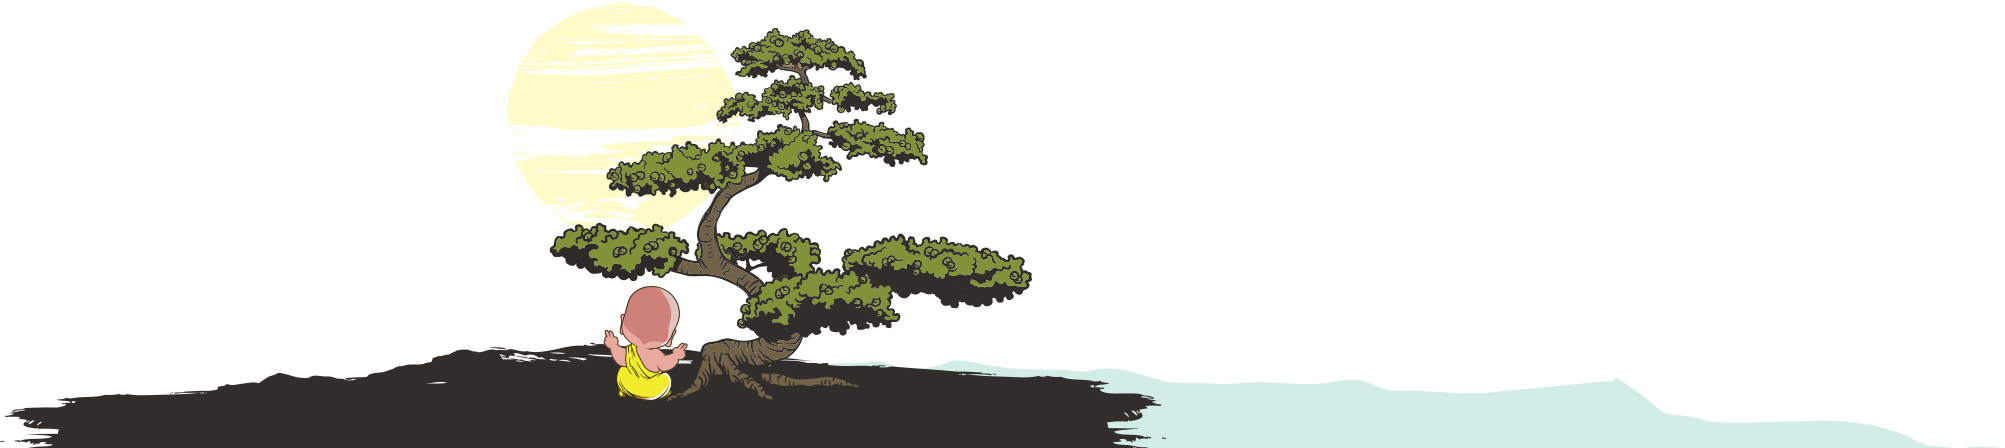 Footer Image - - Bonsai Tree - Brown On Light Throw Blanket (2005x448)